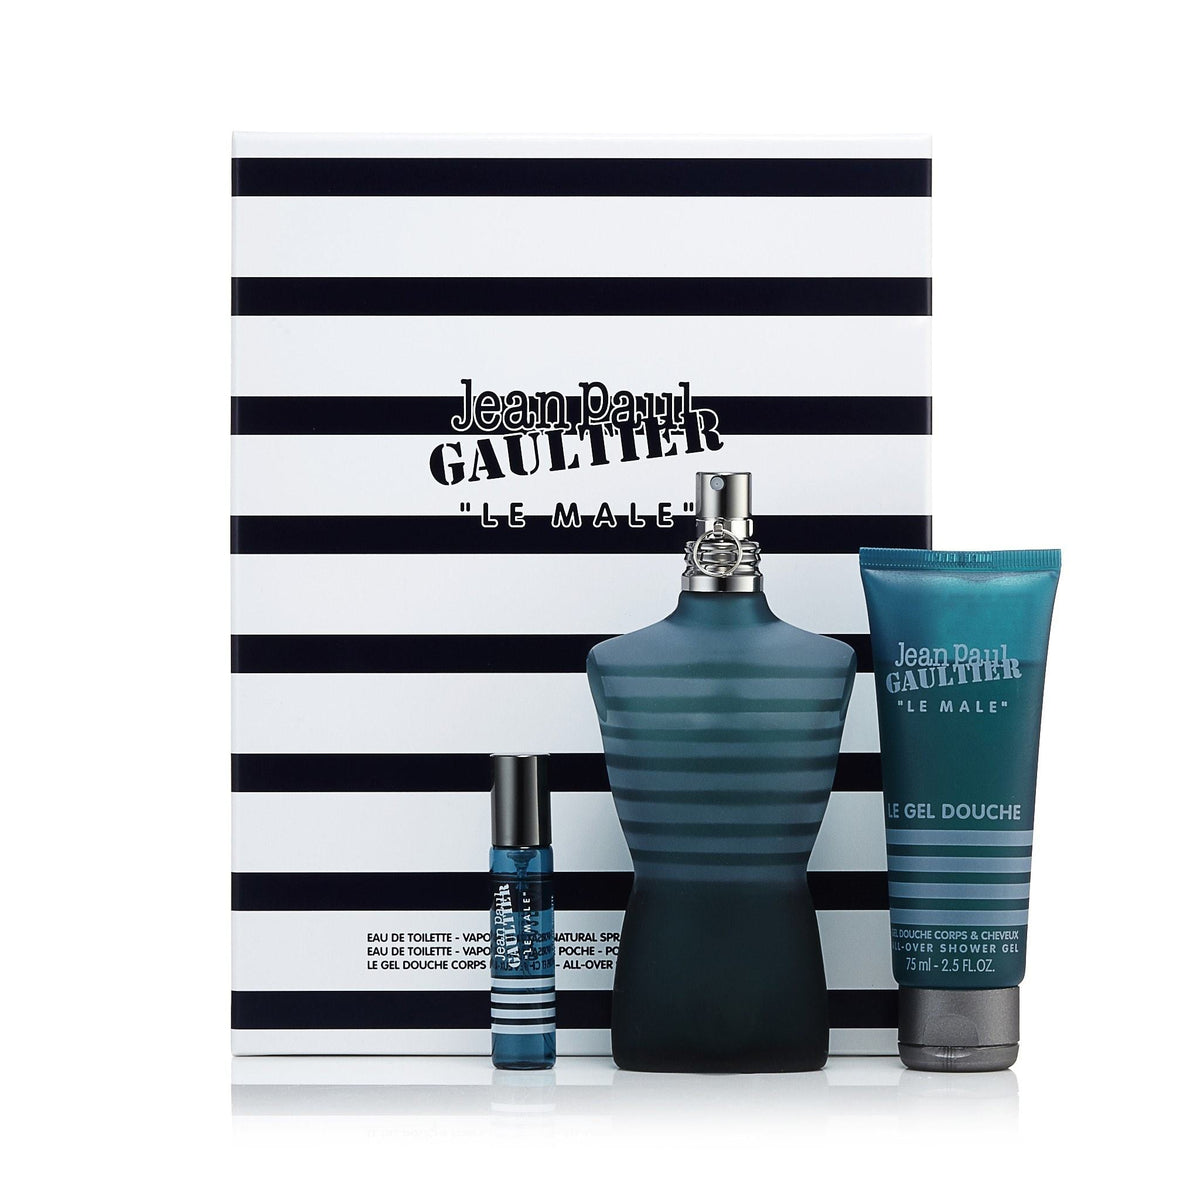 Gaultier Gift Set for Men by Jean Paul Gaultier 4.2 oz.